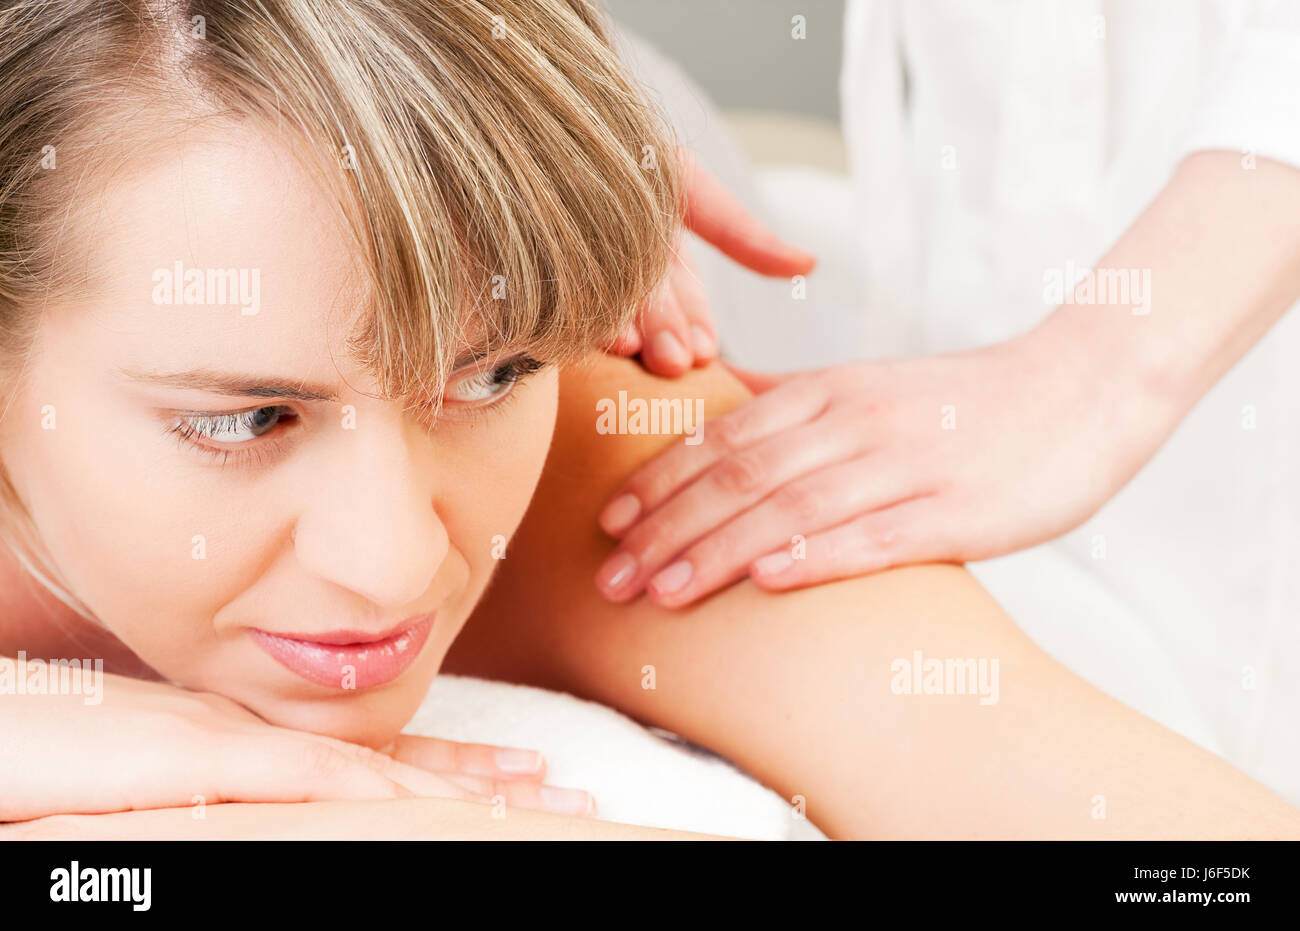 woman care wellness massage cosmetics beauty care enthusiasm amusement Stock Photo